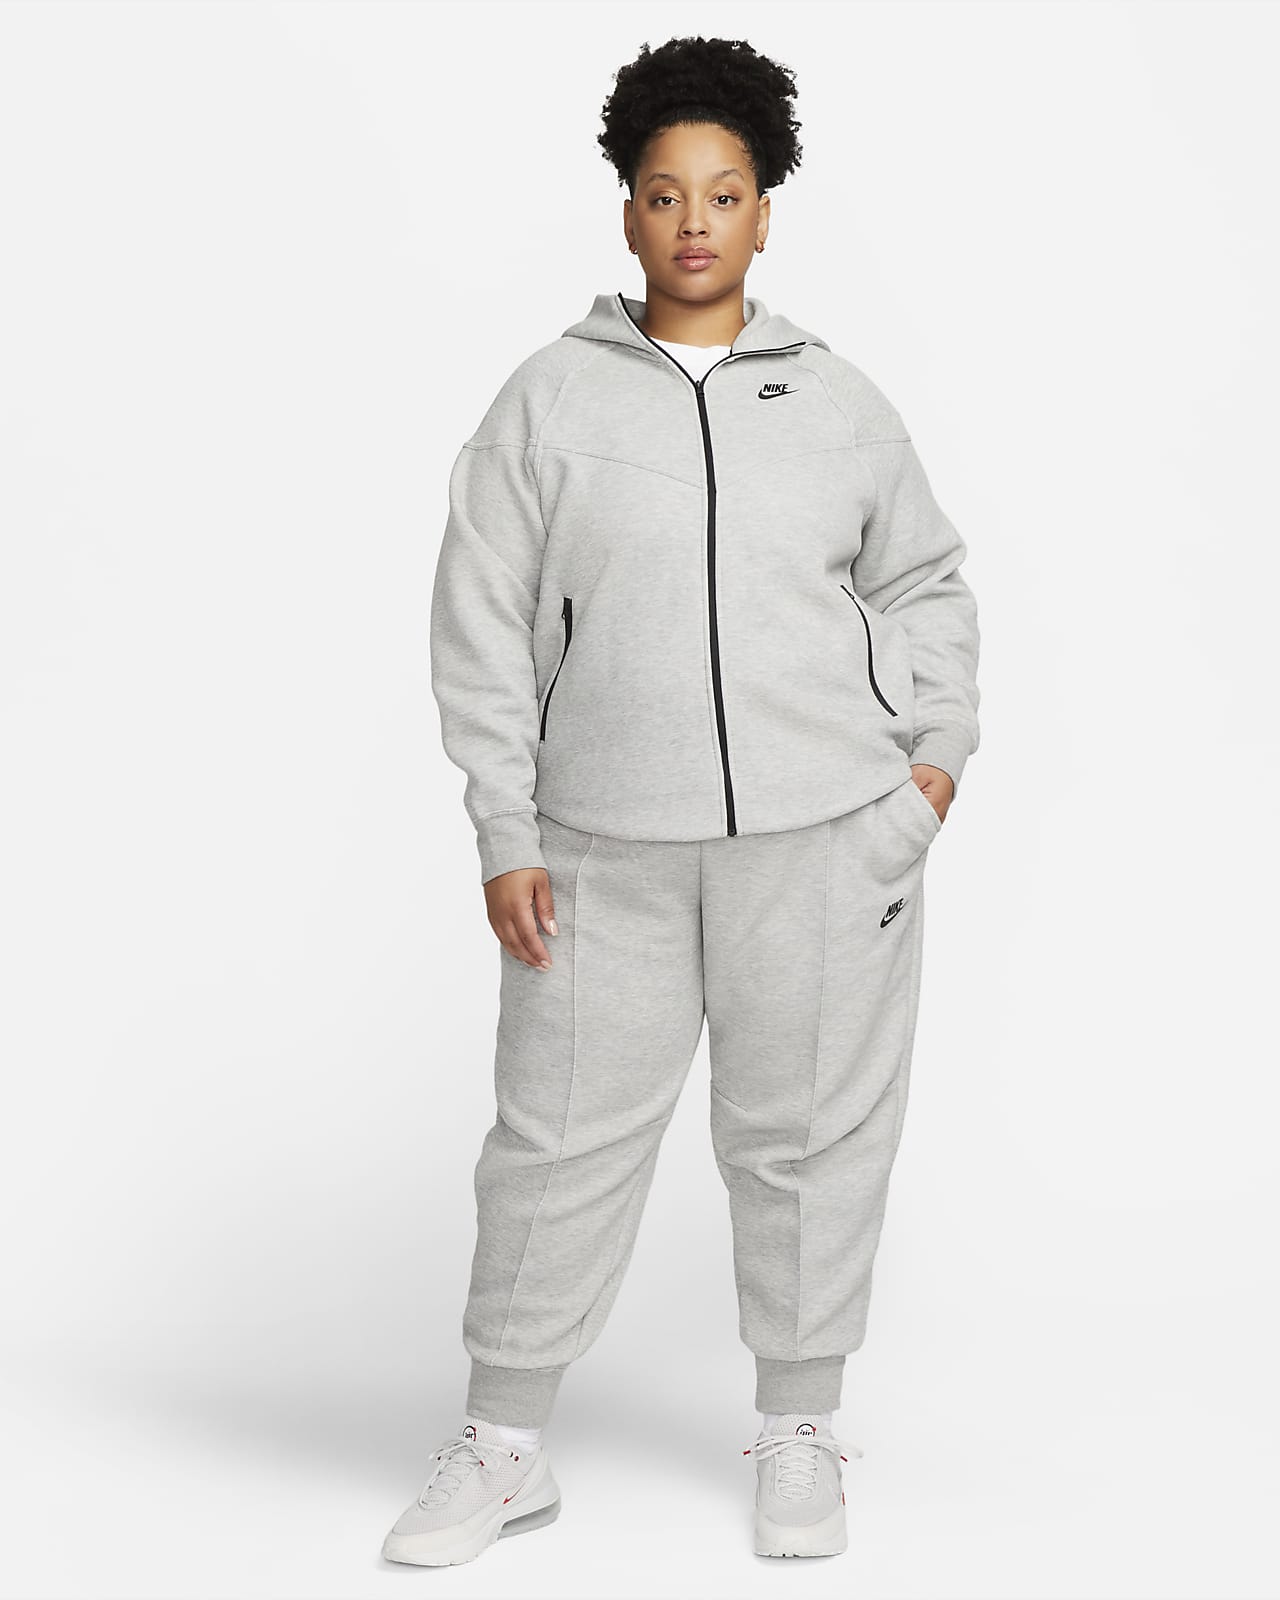 Womens Nike Full Zip Jacket Size Small - beyond exchange